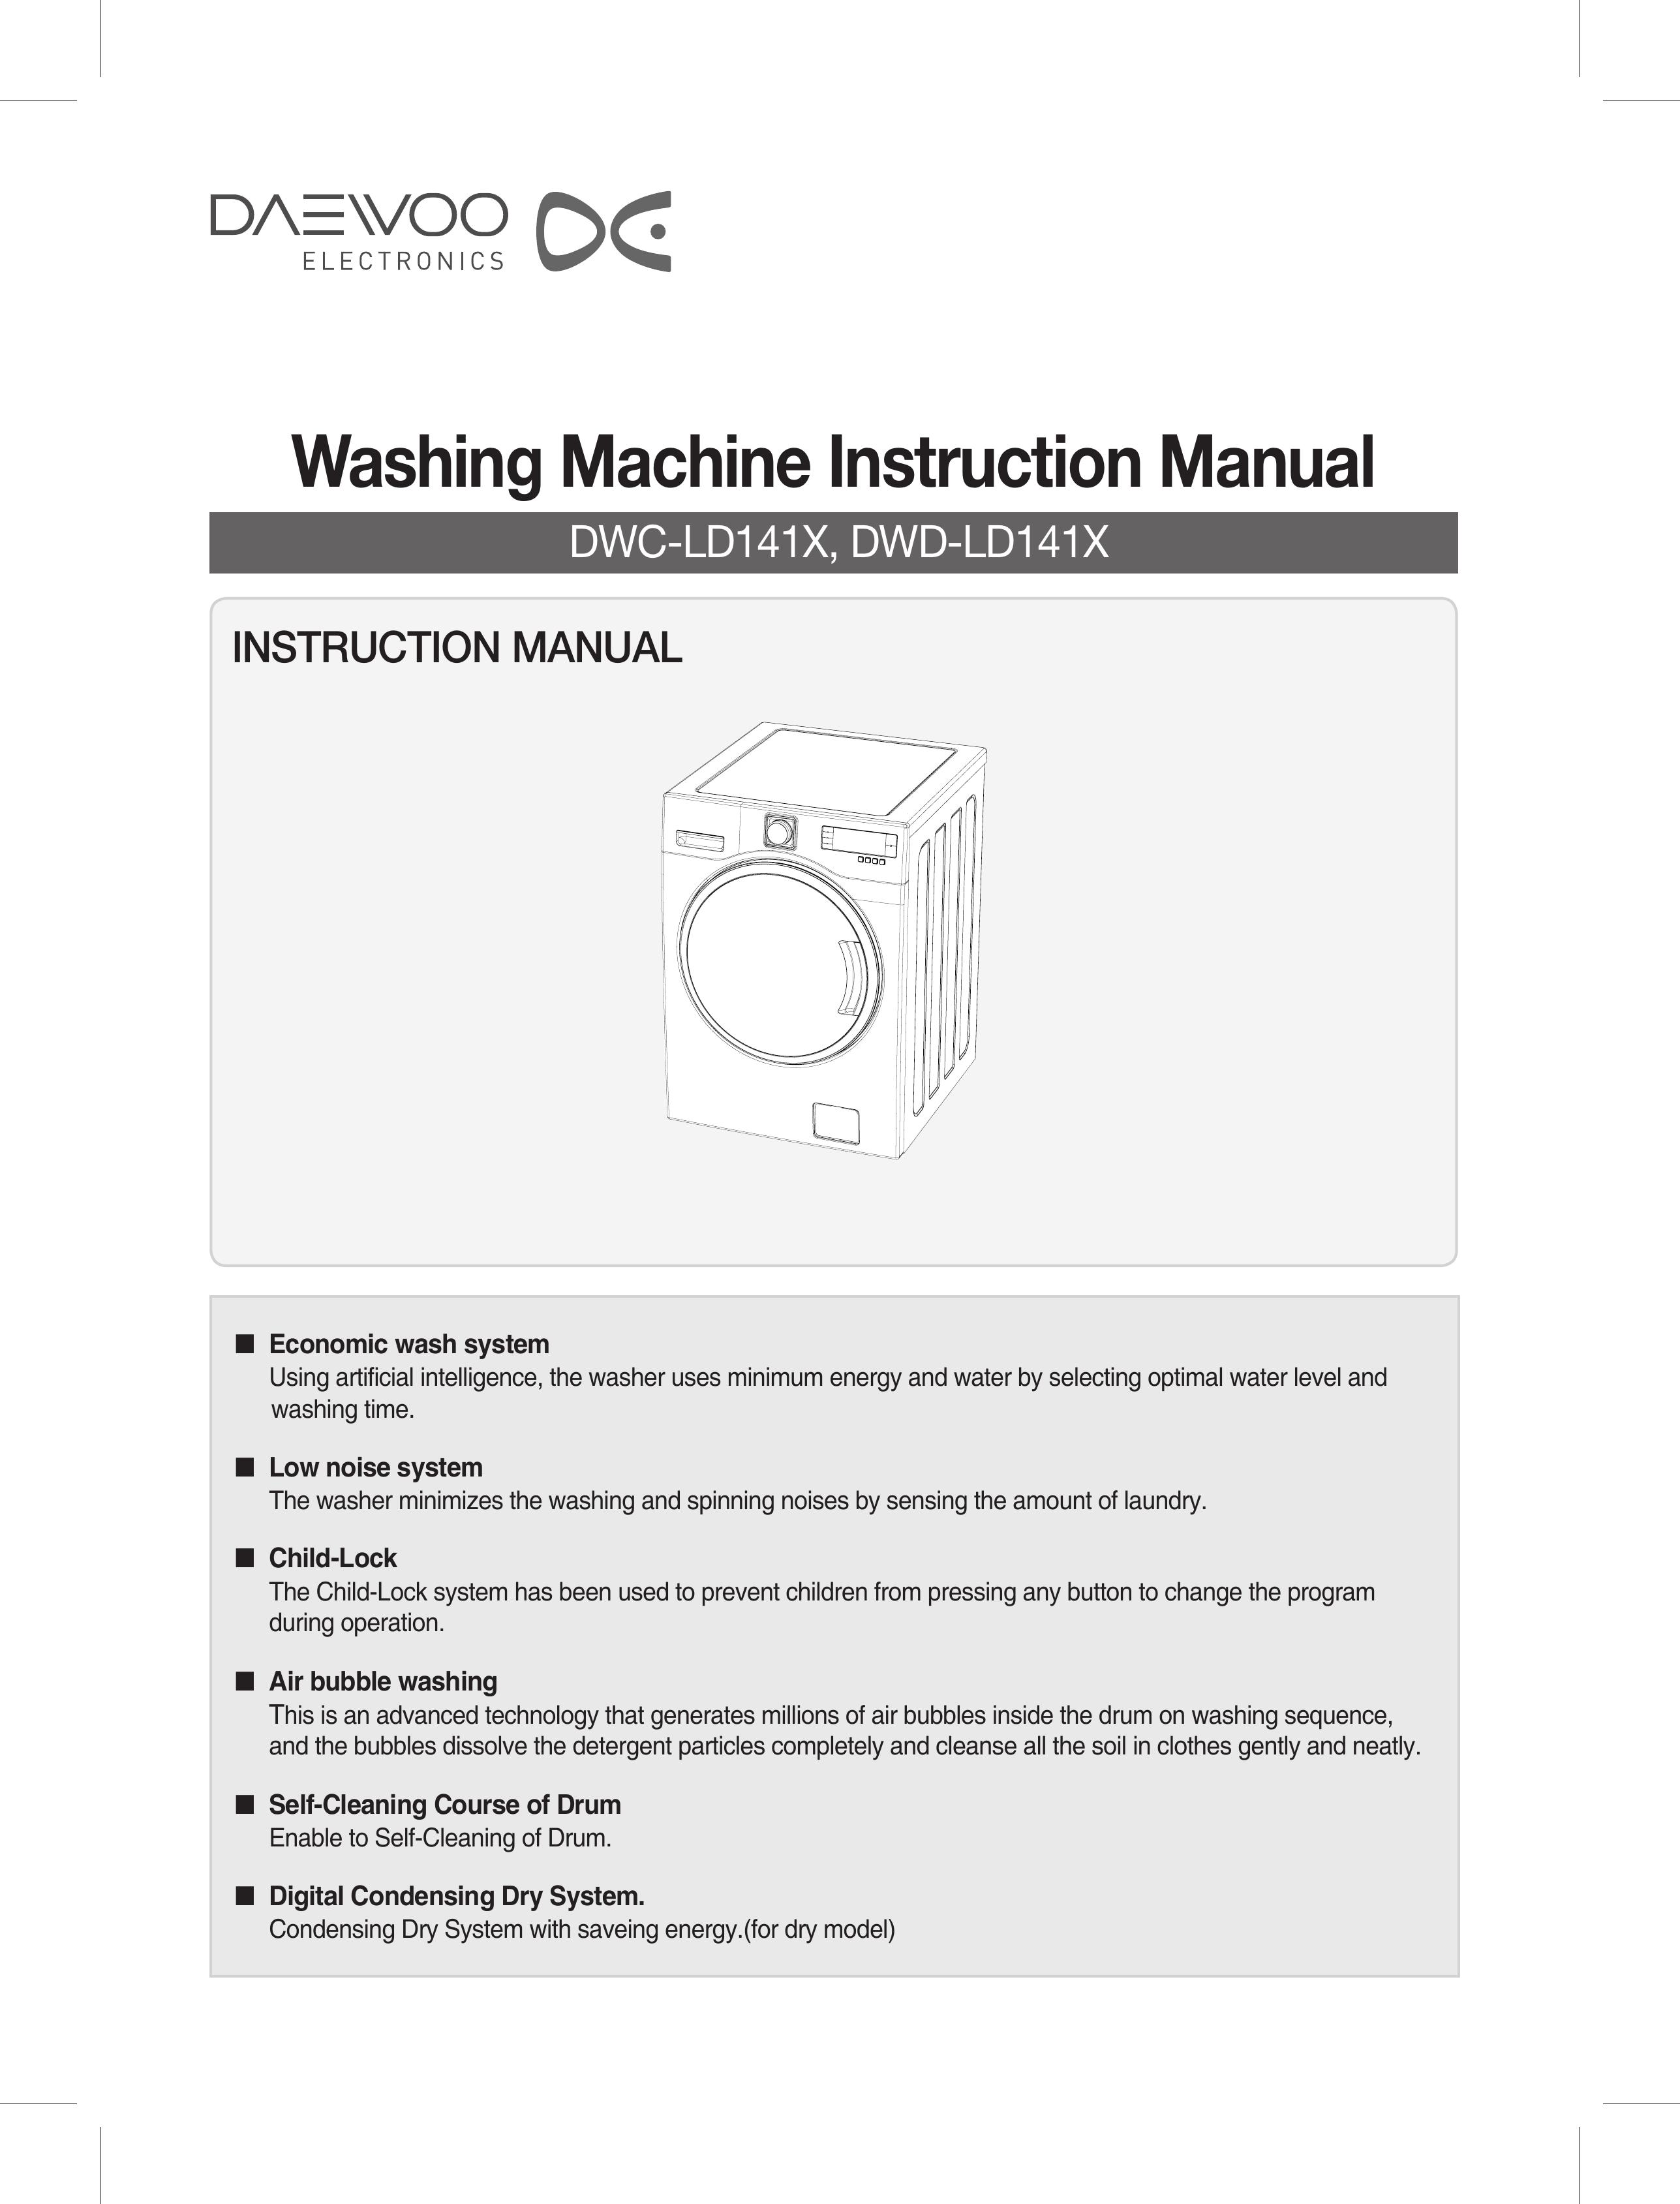 Daewoo DWC-LD141X Washer User Manual